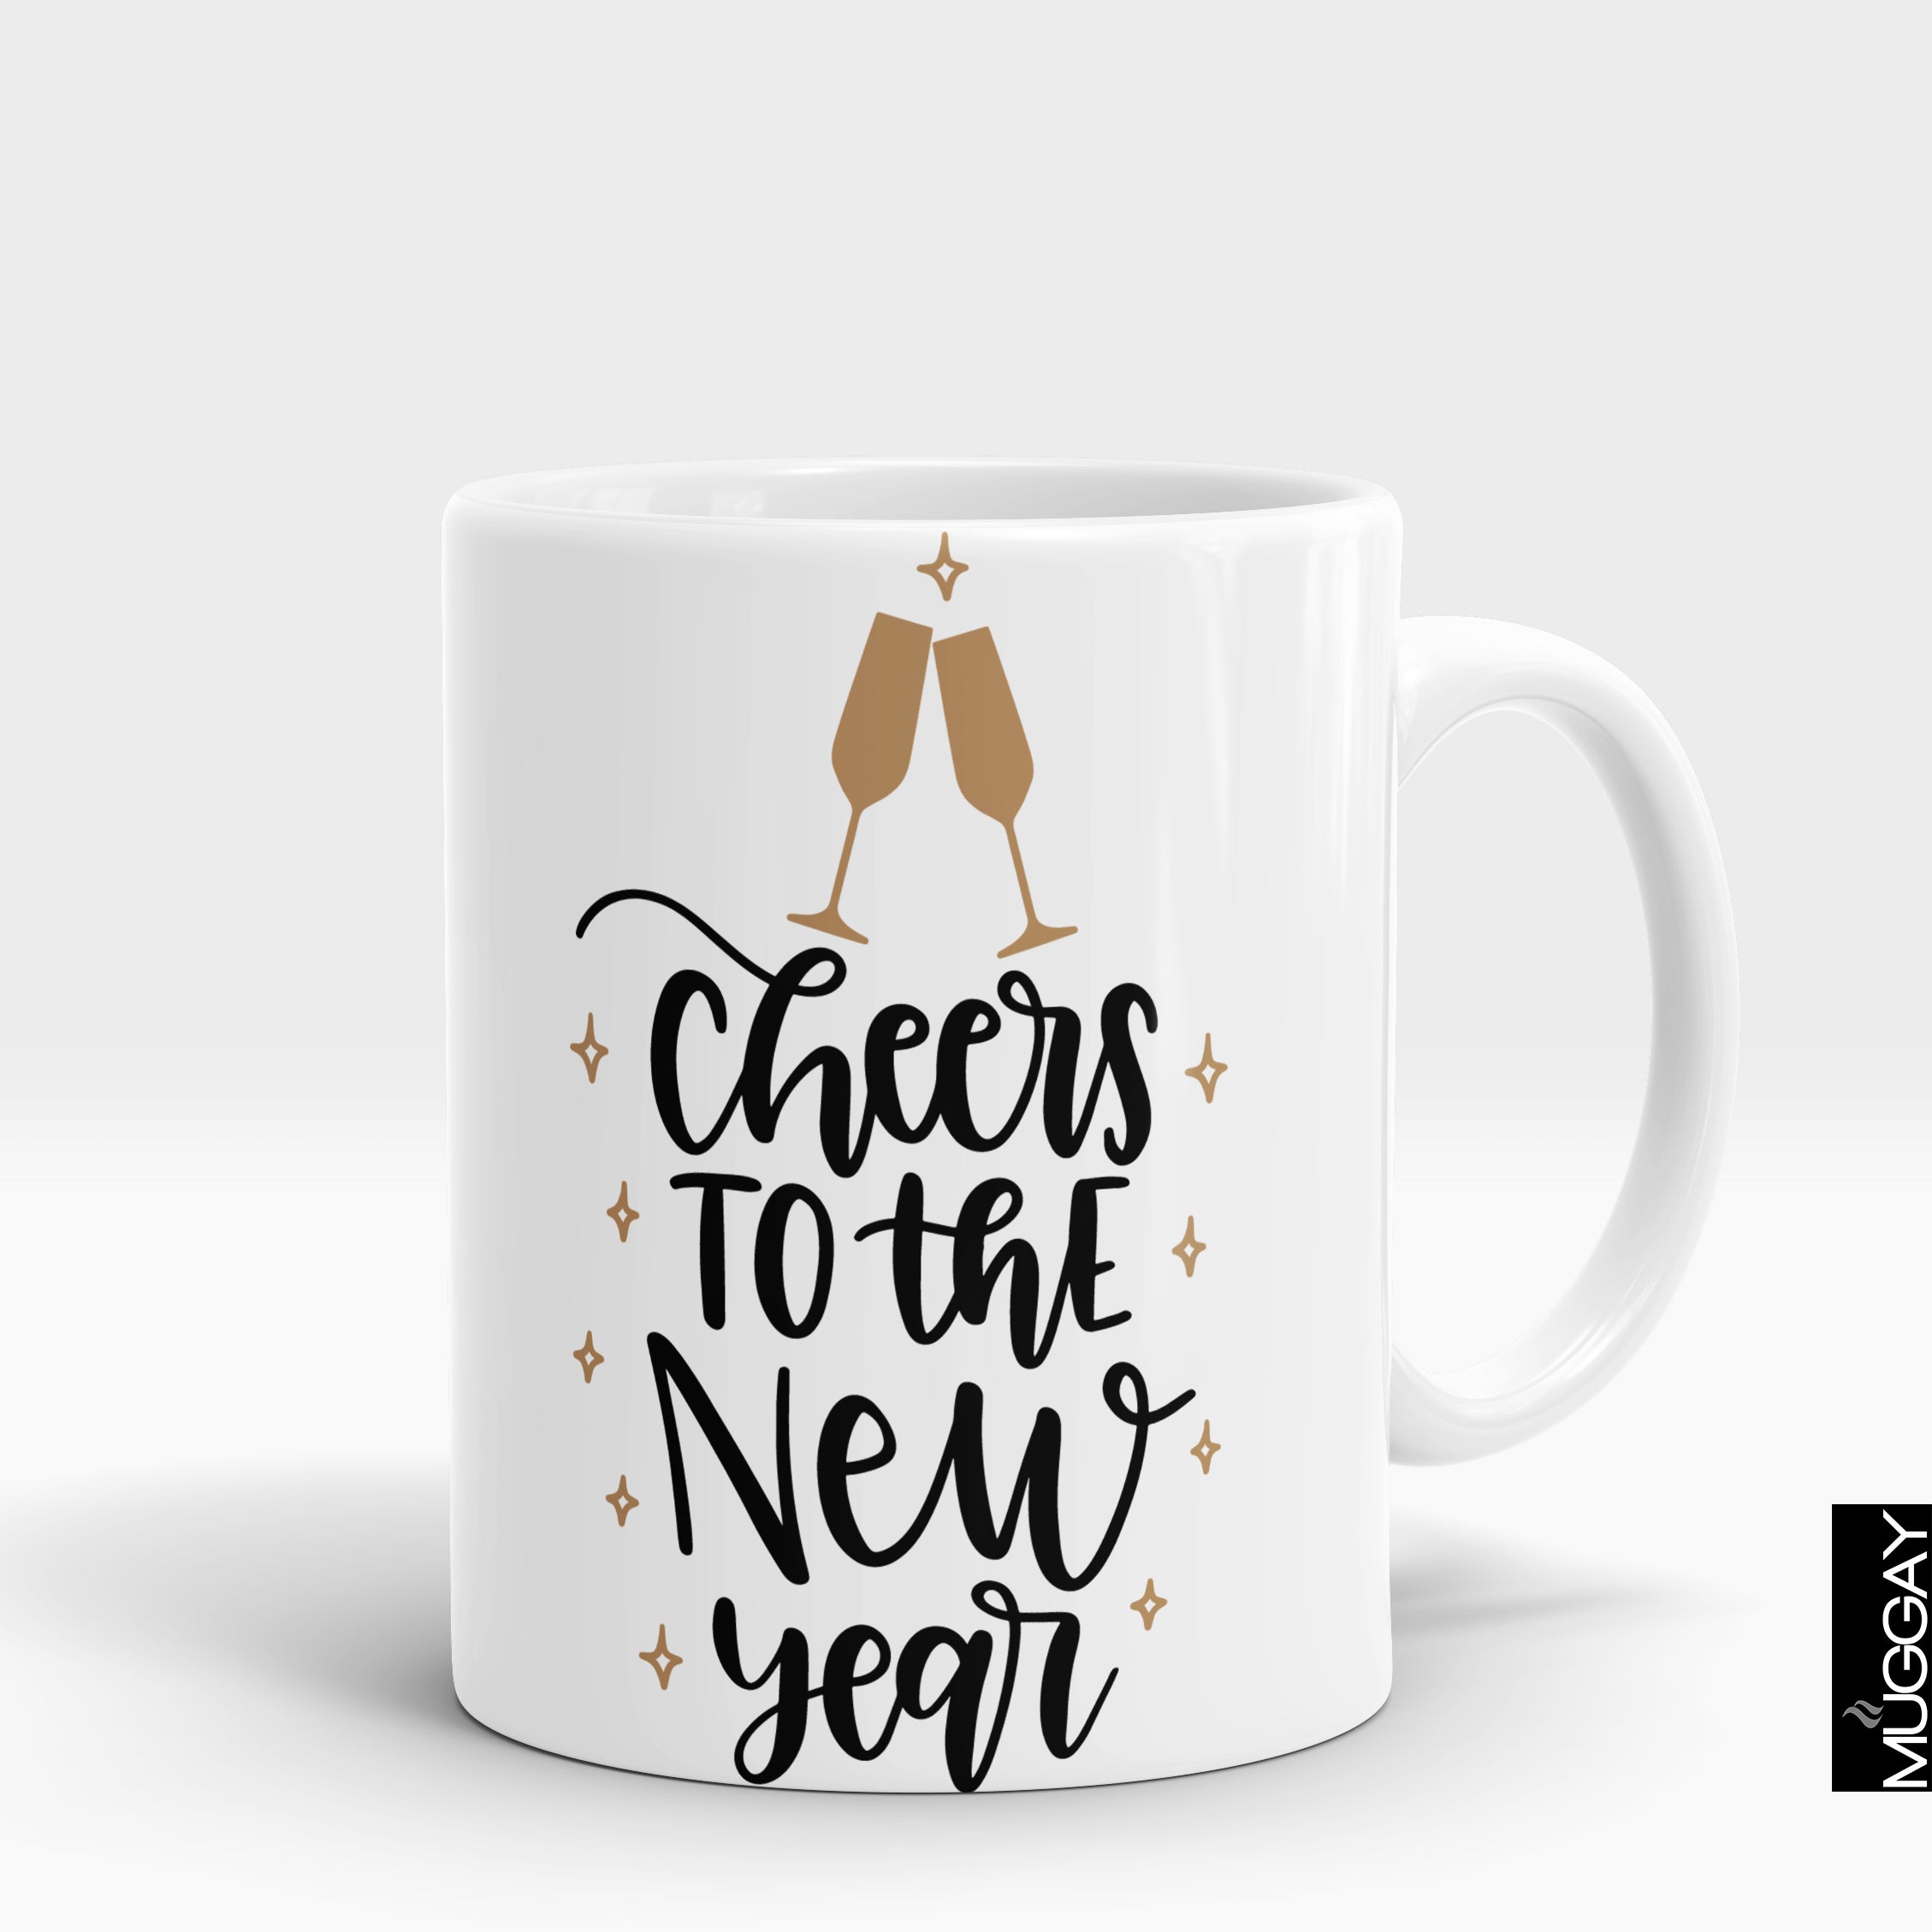 Cheers to the new year - Muggay.com - Mugs - Printing shop - truck Art mugs - Mug printing - Customized printing - Digital printing - Muggay 